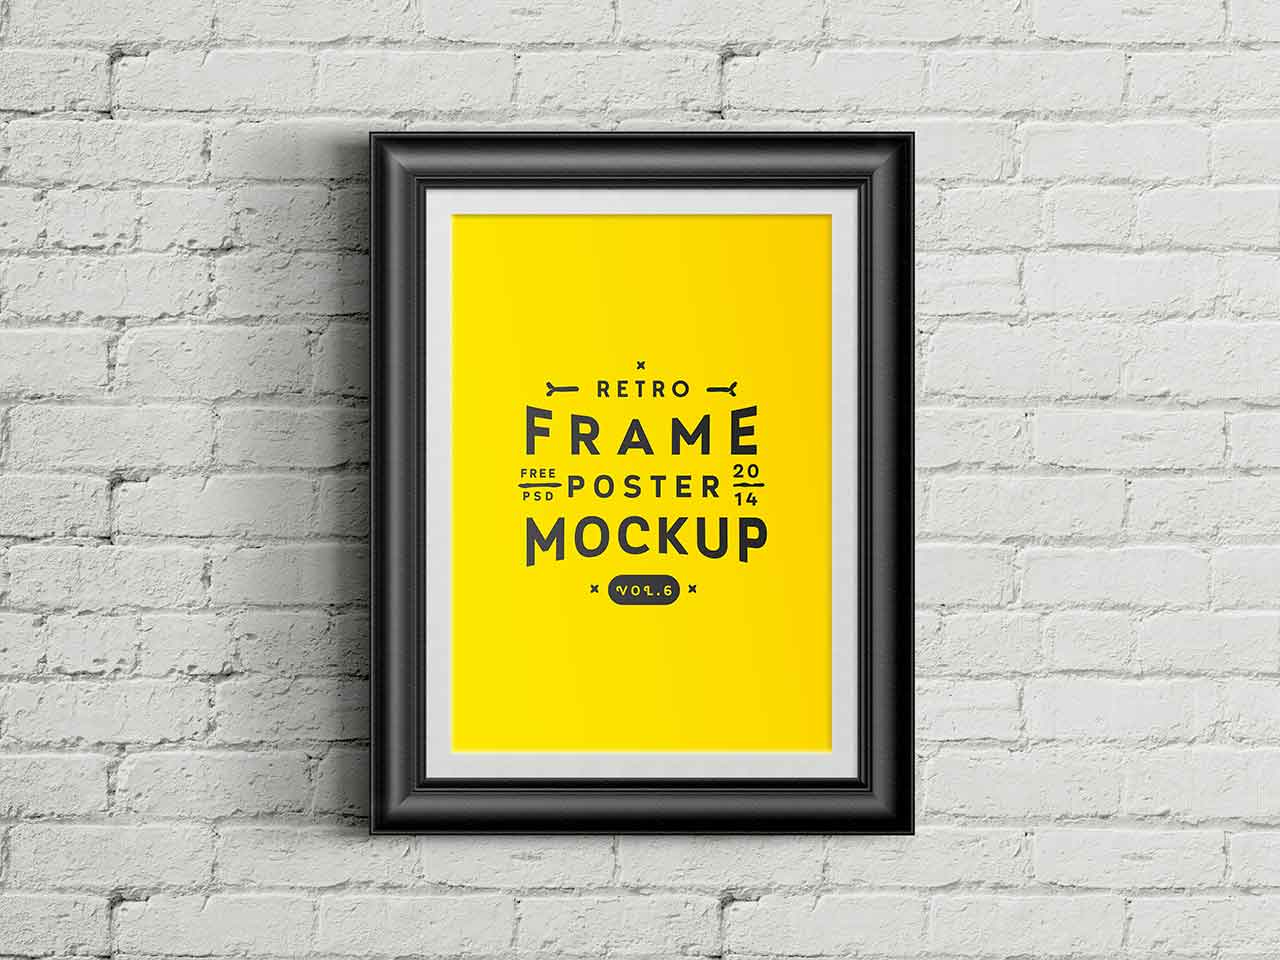 8x11 White Frame Mockup,A4 A2 Digital Frames,Product Mockup,Styled Mockup,DIY Projects,Empty Frame Poster Mockup,INSTANT DOWNLOAD